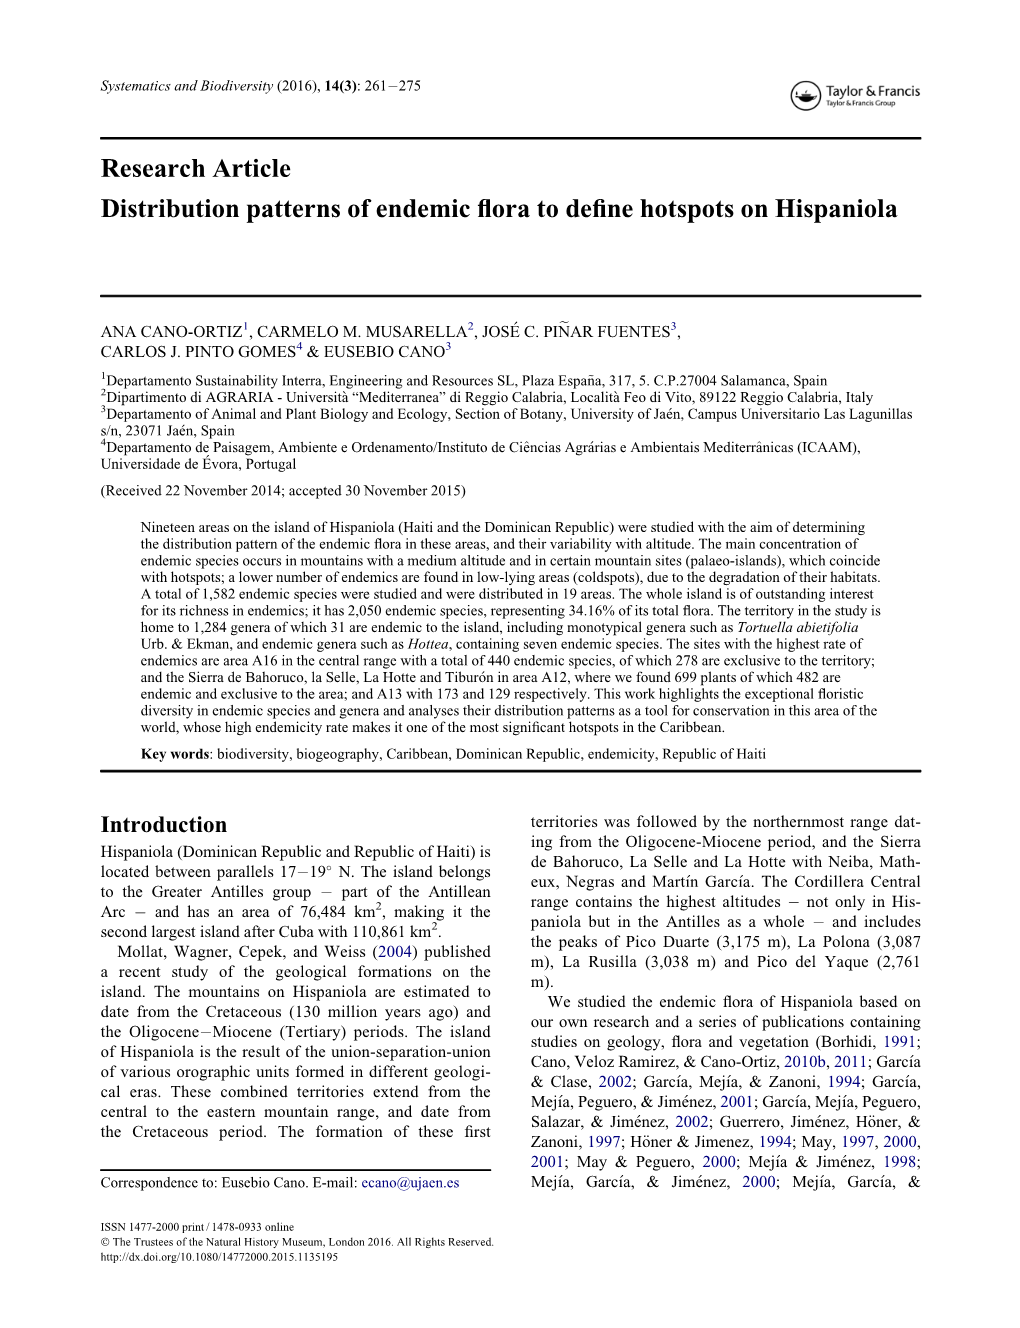 Distribution Patterns of Endemic Flora to Define Hotspots on Hispaniola